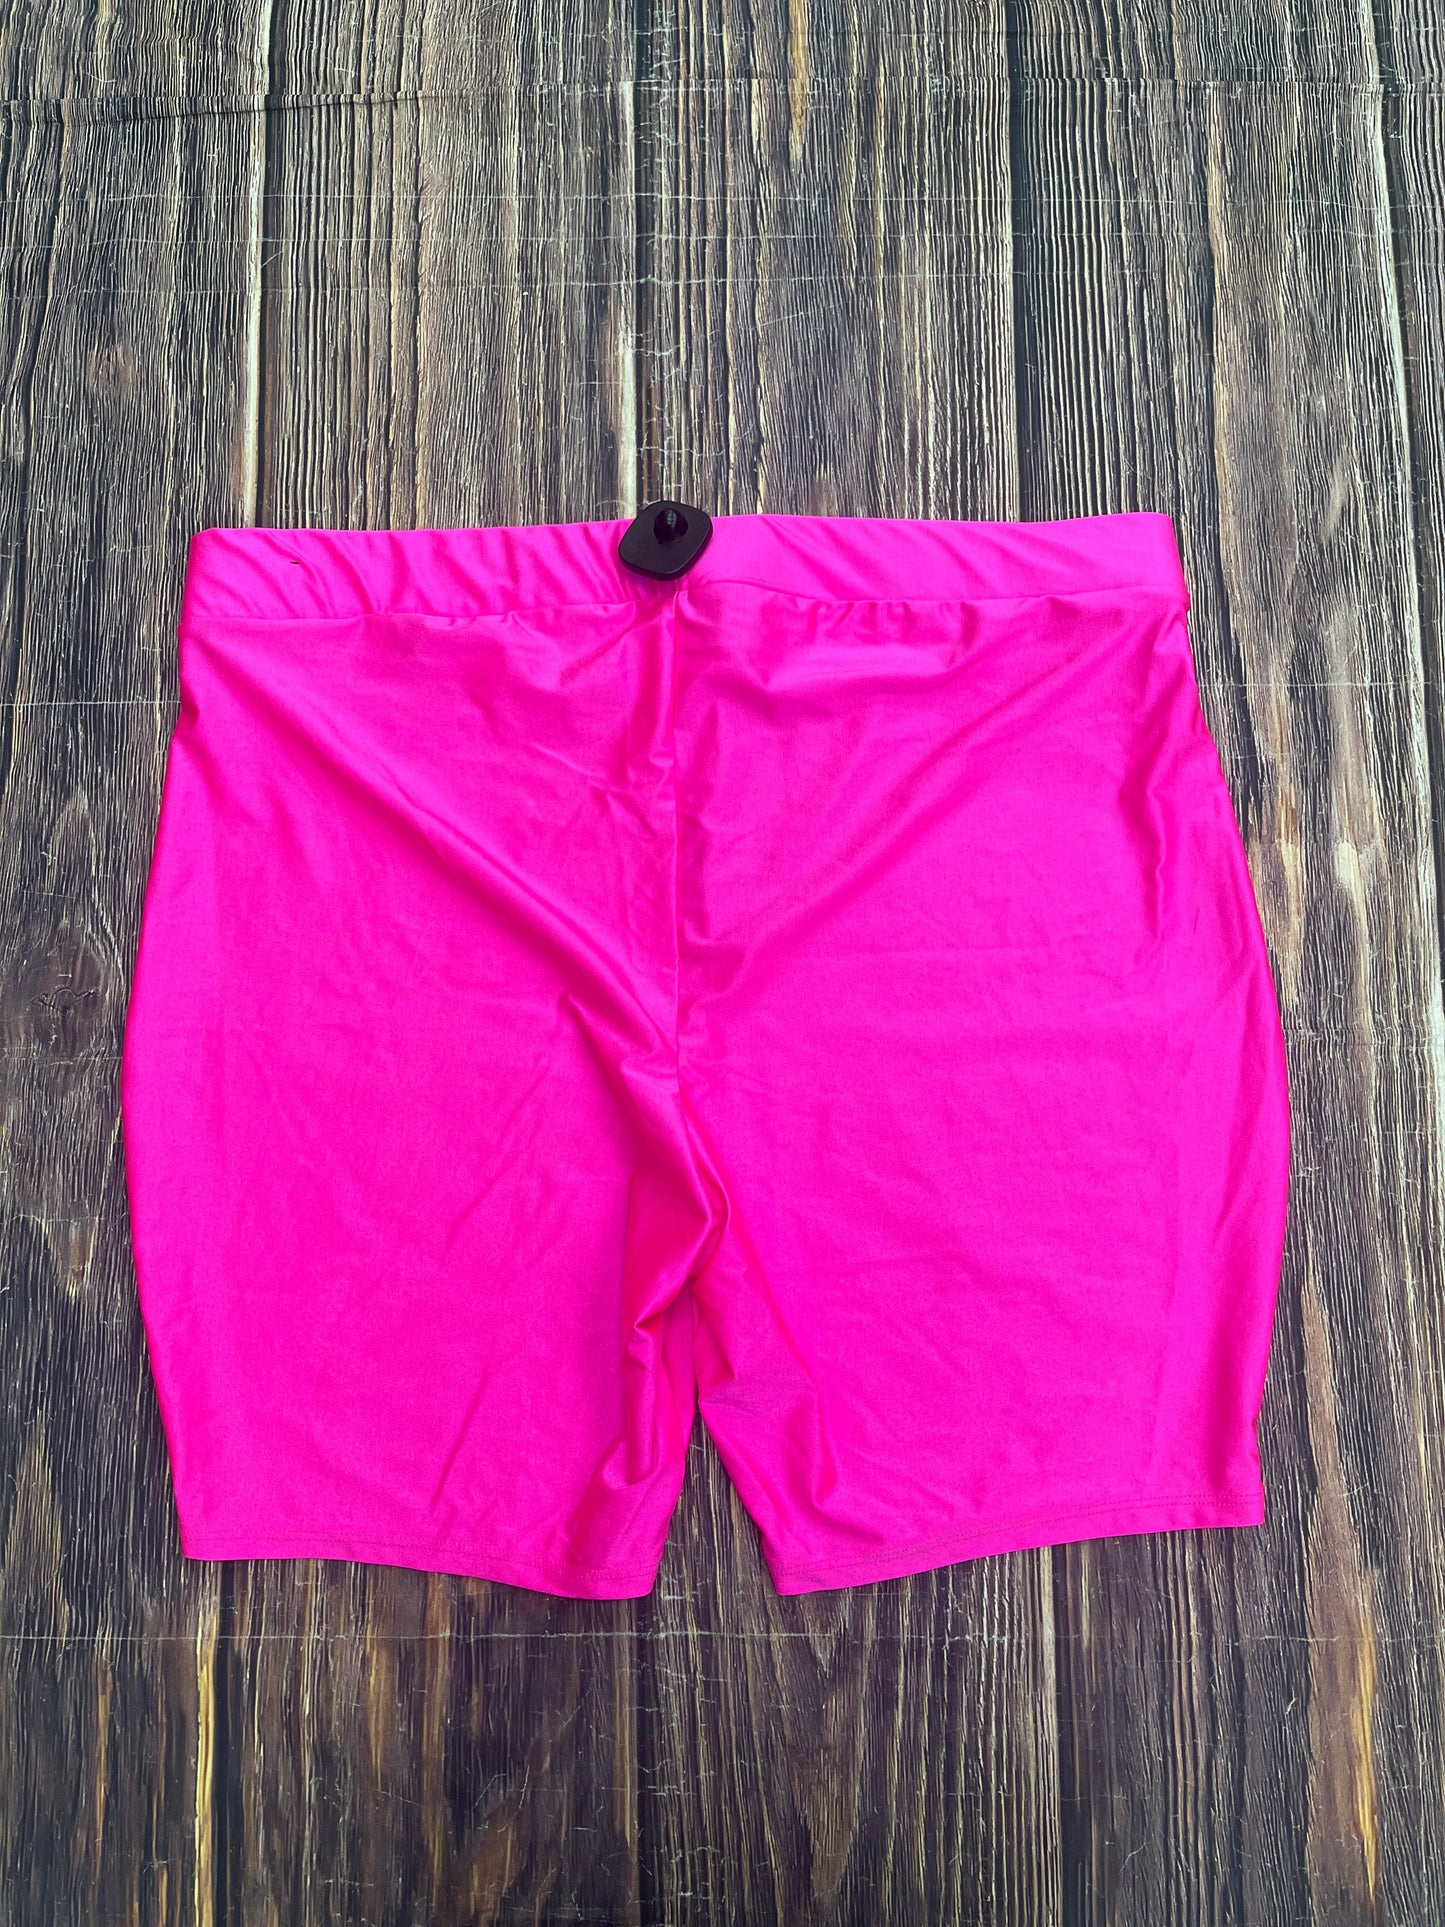 Pink Athletic Shorts Torrid, Size 4x